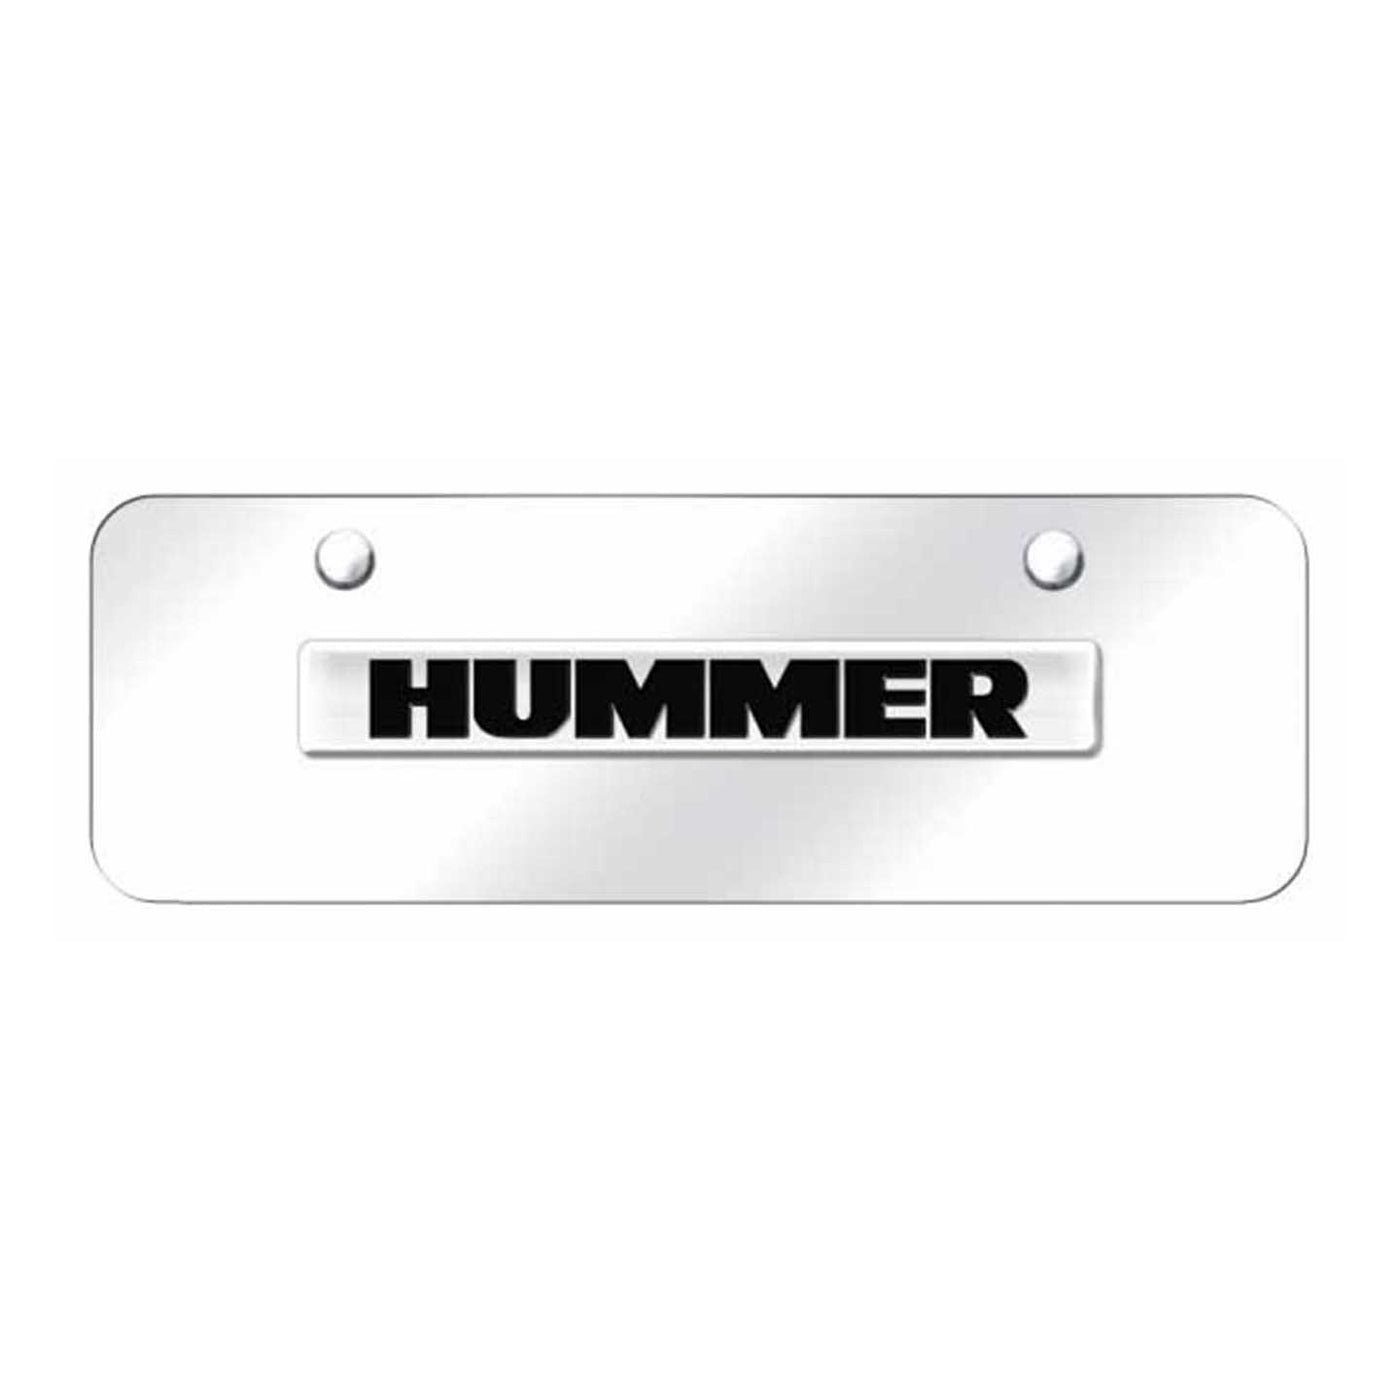 Hummer Name Mini Plate - Chrome on Mirrored